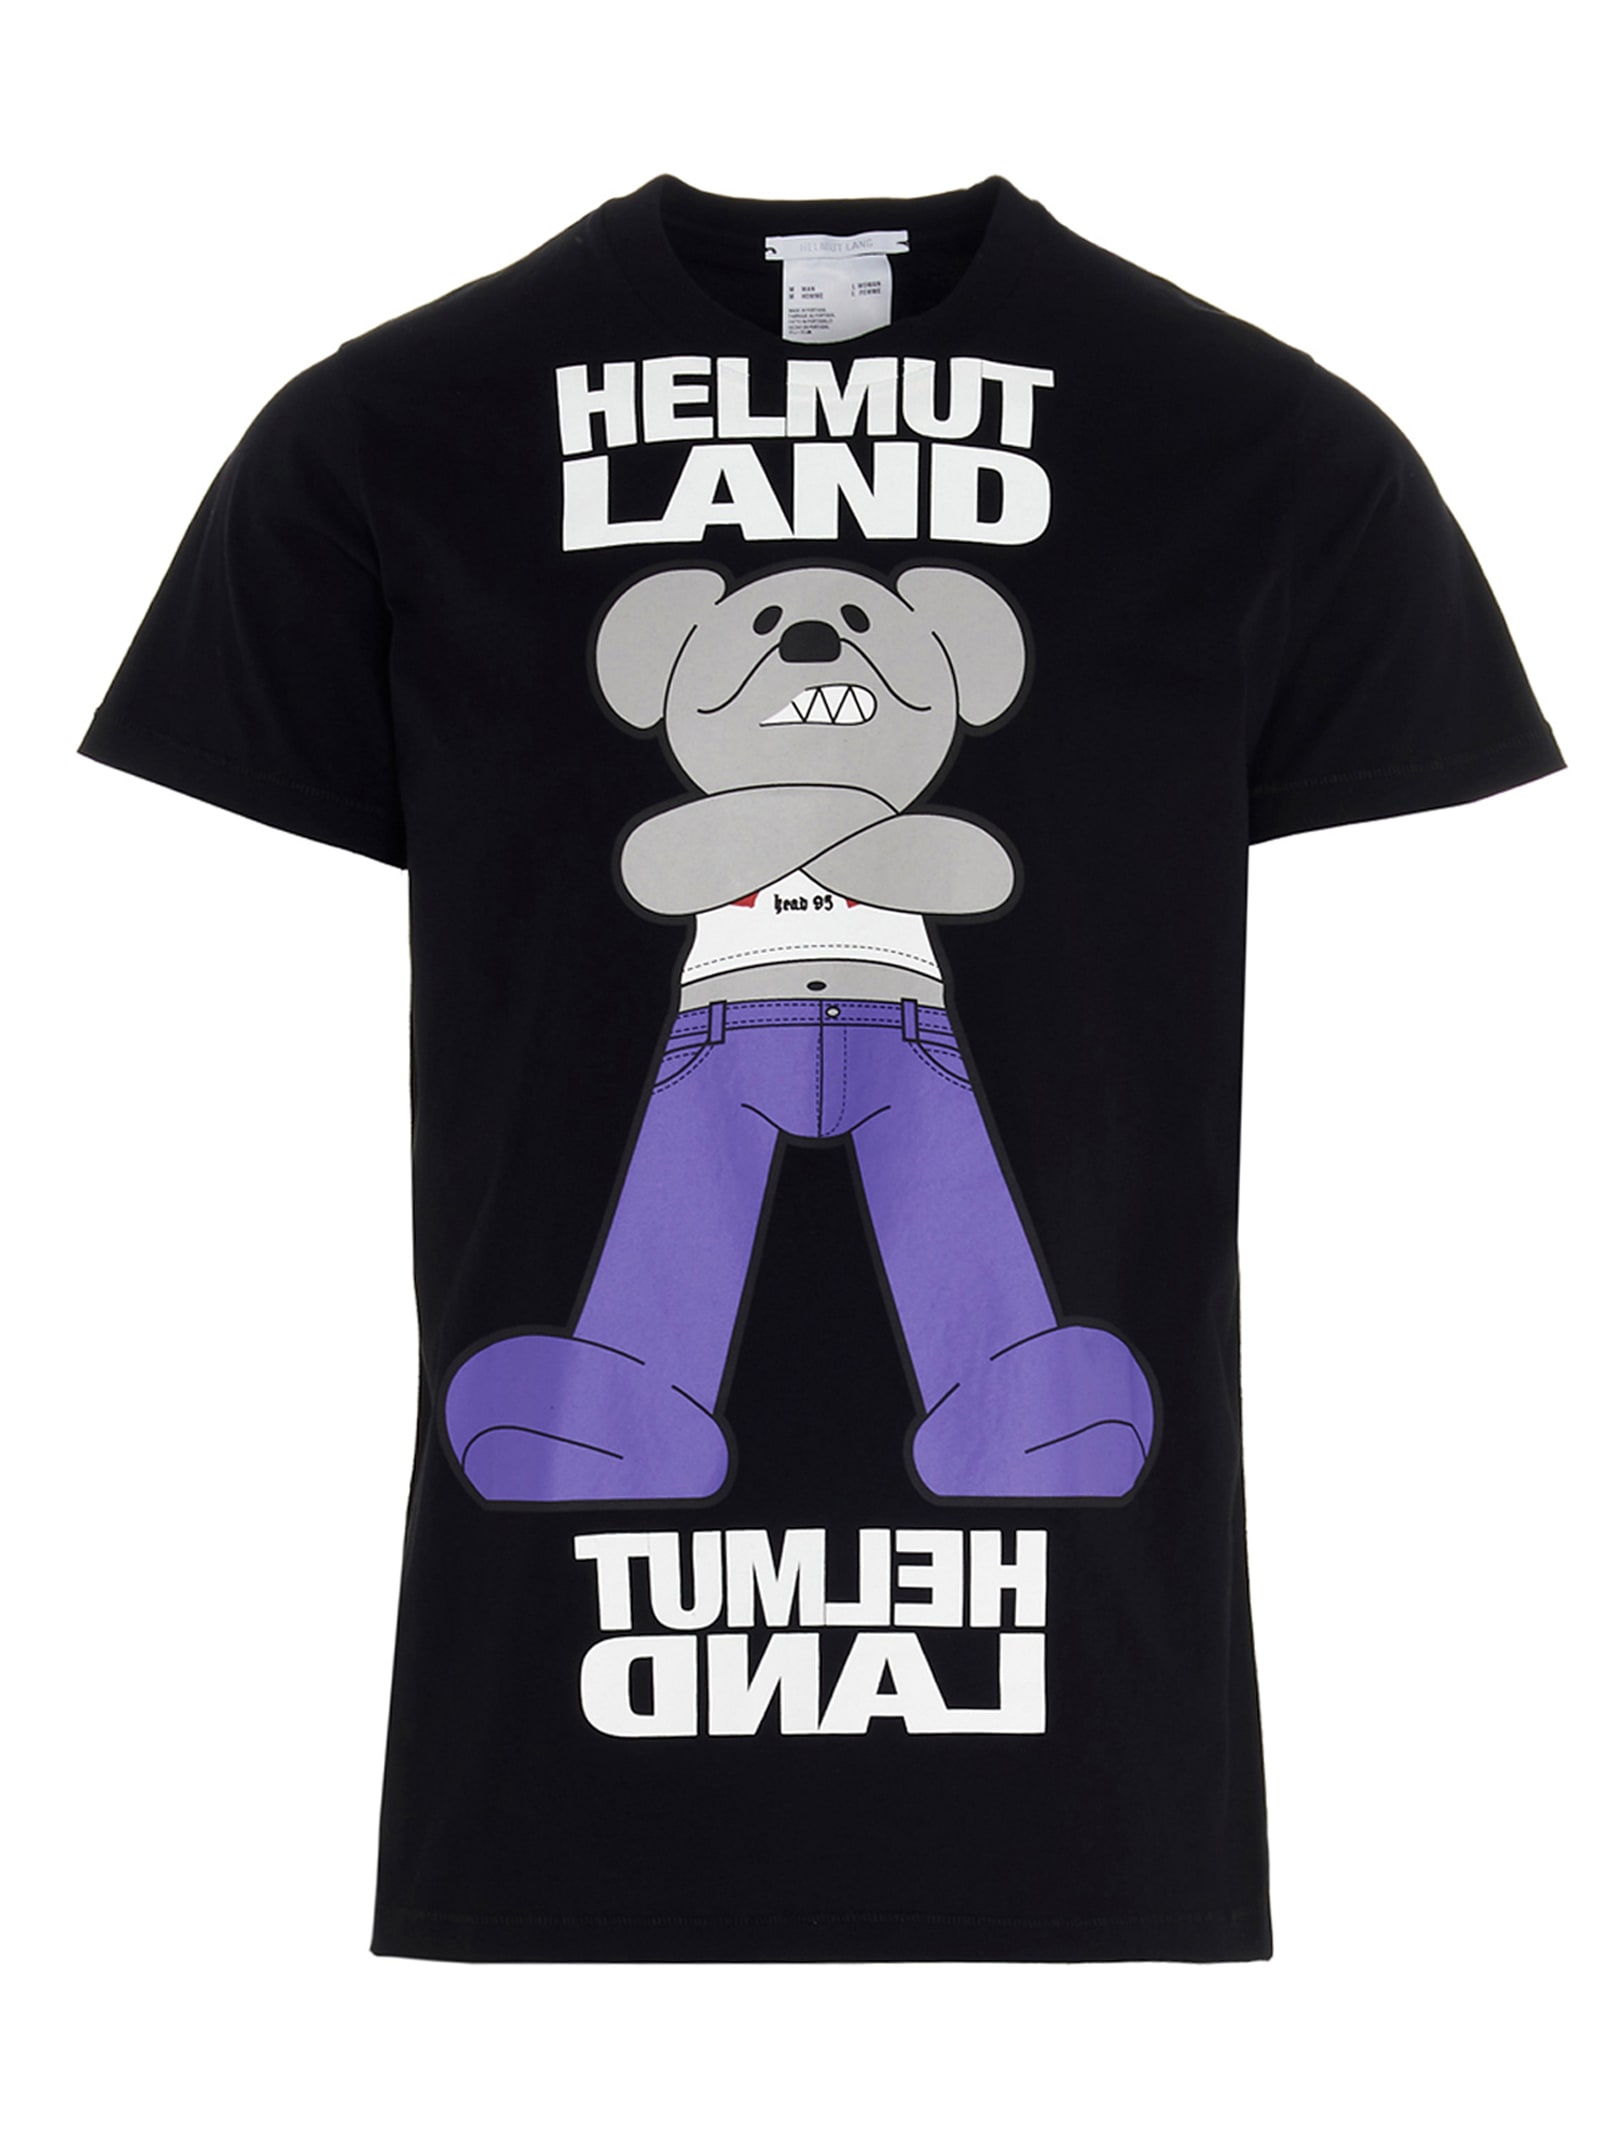 Helmut Lang T Shirts Italist Always Like A Sale